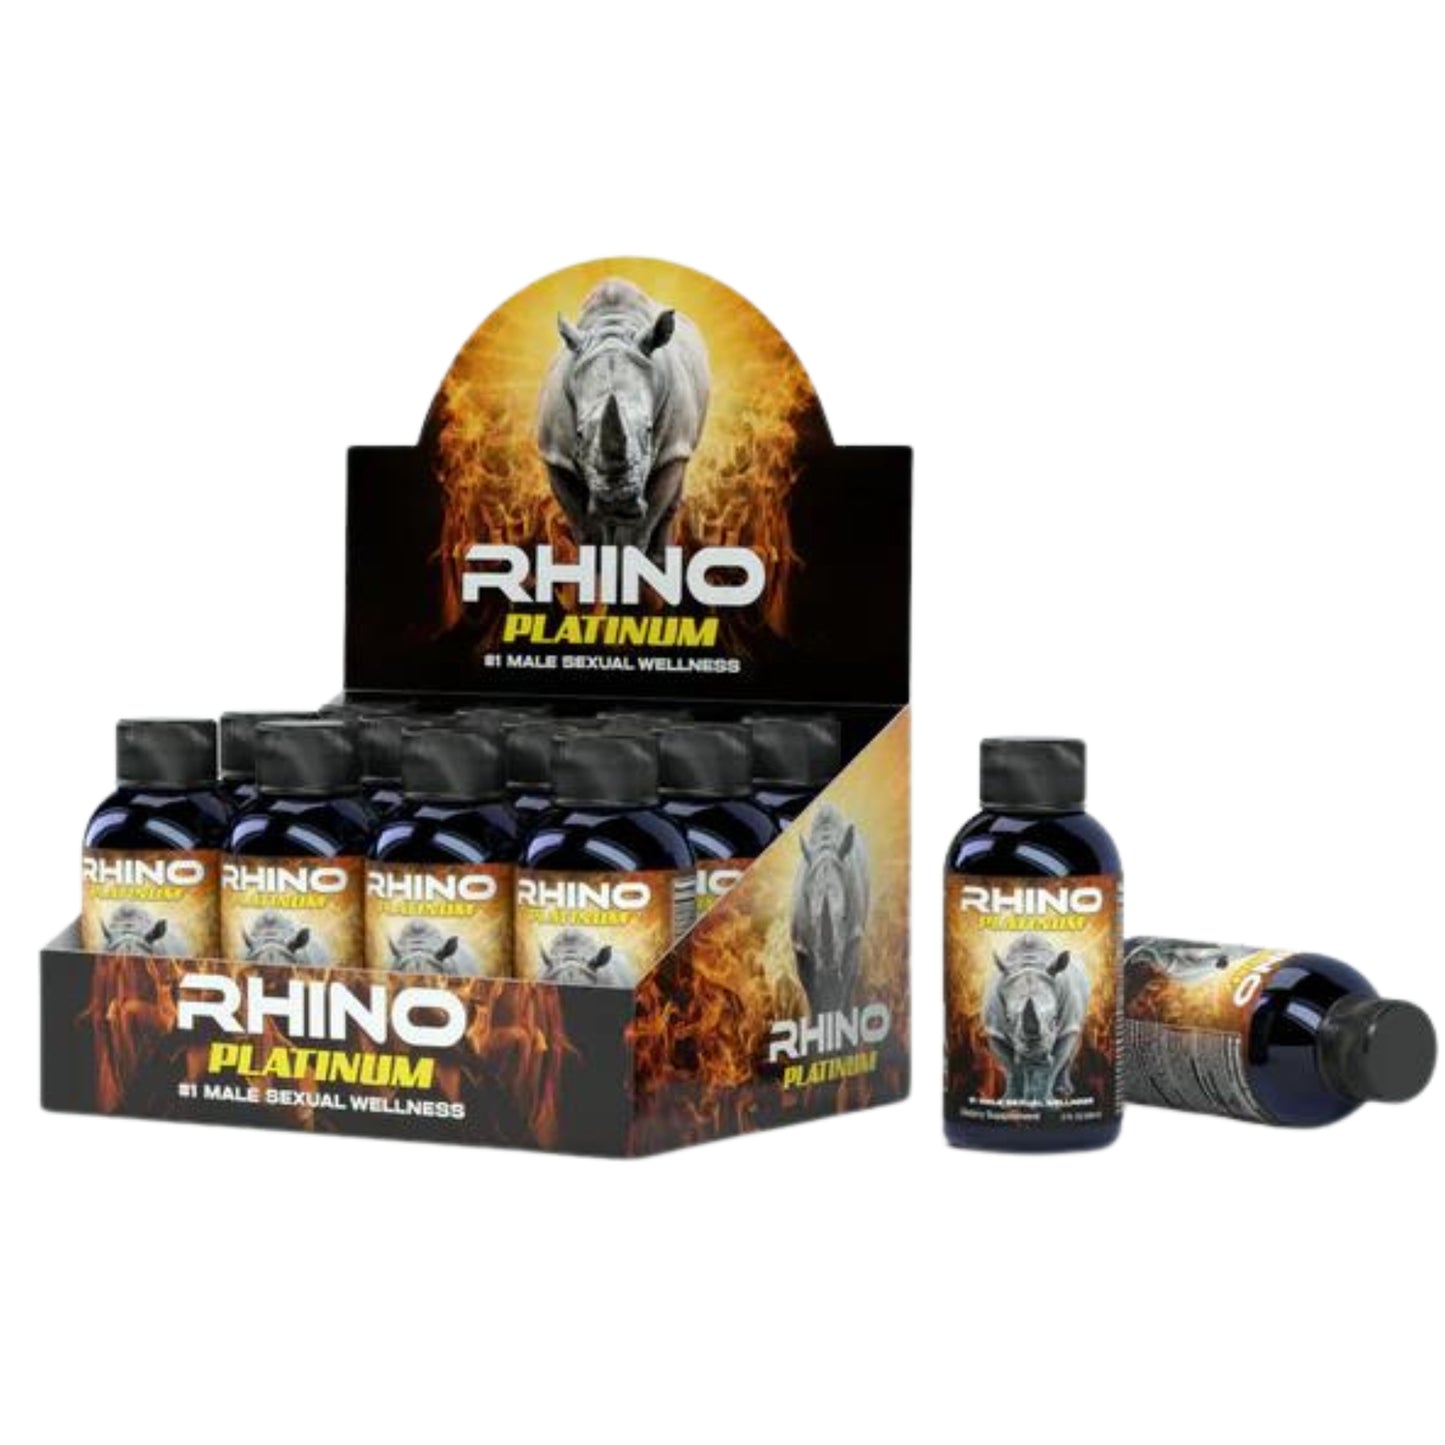 Rhino Platinum 8000 Shots, Time Size Stamina, 100% Genuine, Made in USA